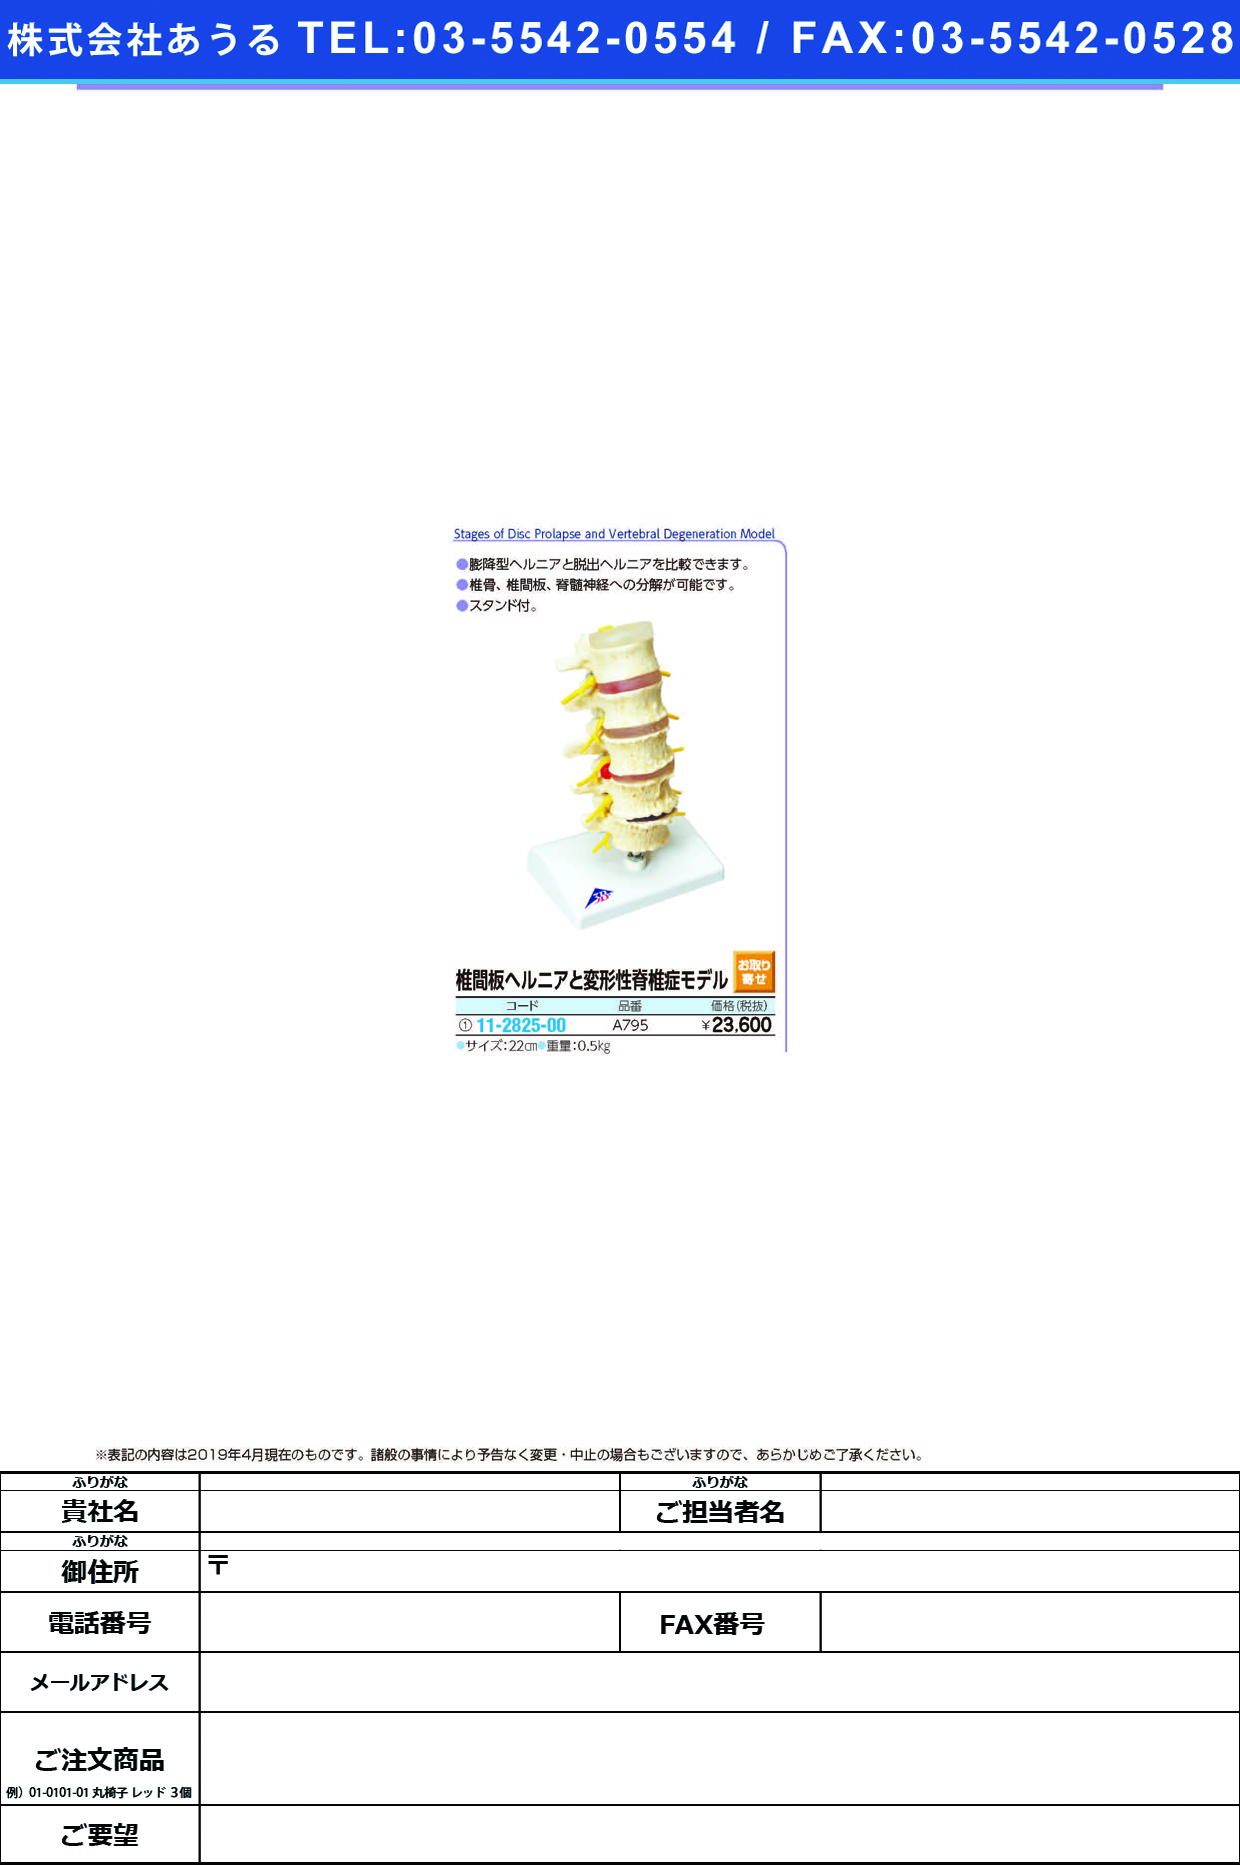 (11-2825-00)椎間板ヘルニアと変形性脊椎症モデル A795 ﾂｲｶﾝﾊﾞﾝﾍﾙﾆｱﾄｾｷﾂｲｼｮｳﾓ(京都科学)【1台単位】【2019年カタログ商品】